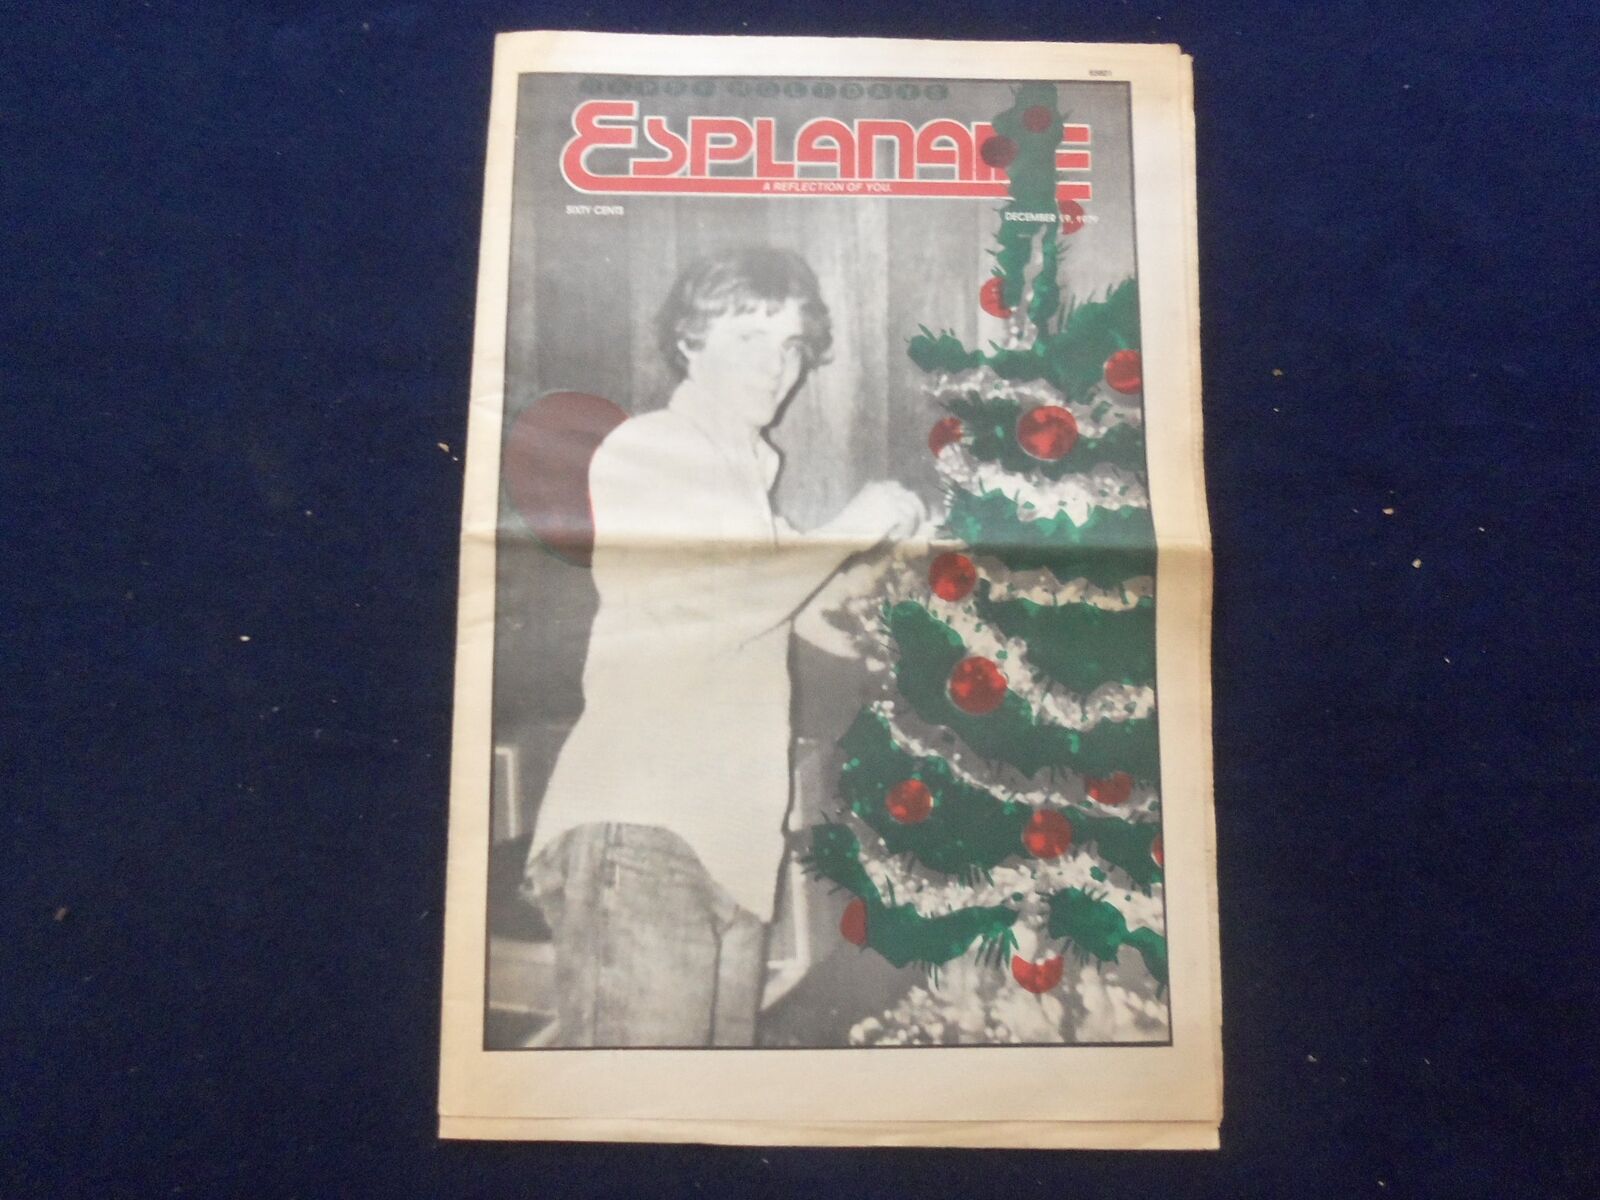 1979 DECEMBER 19 ESPLANADE NEWSPAPER - A VIEW FROM THE CLOSET - NP 6825